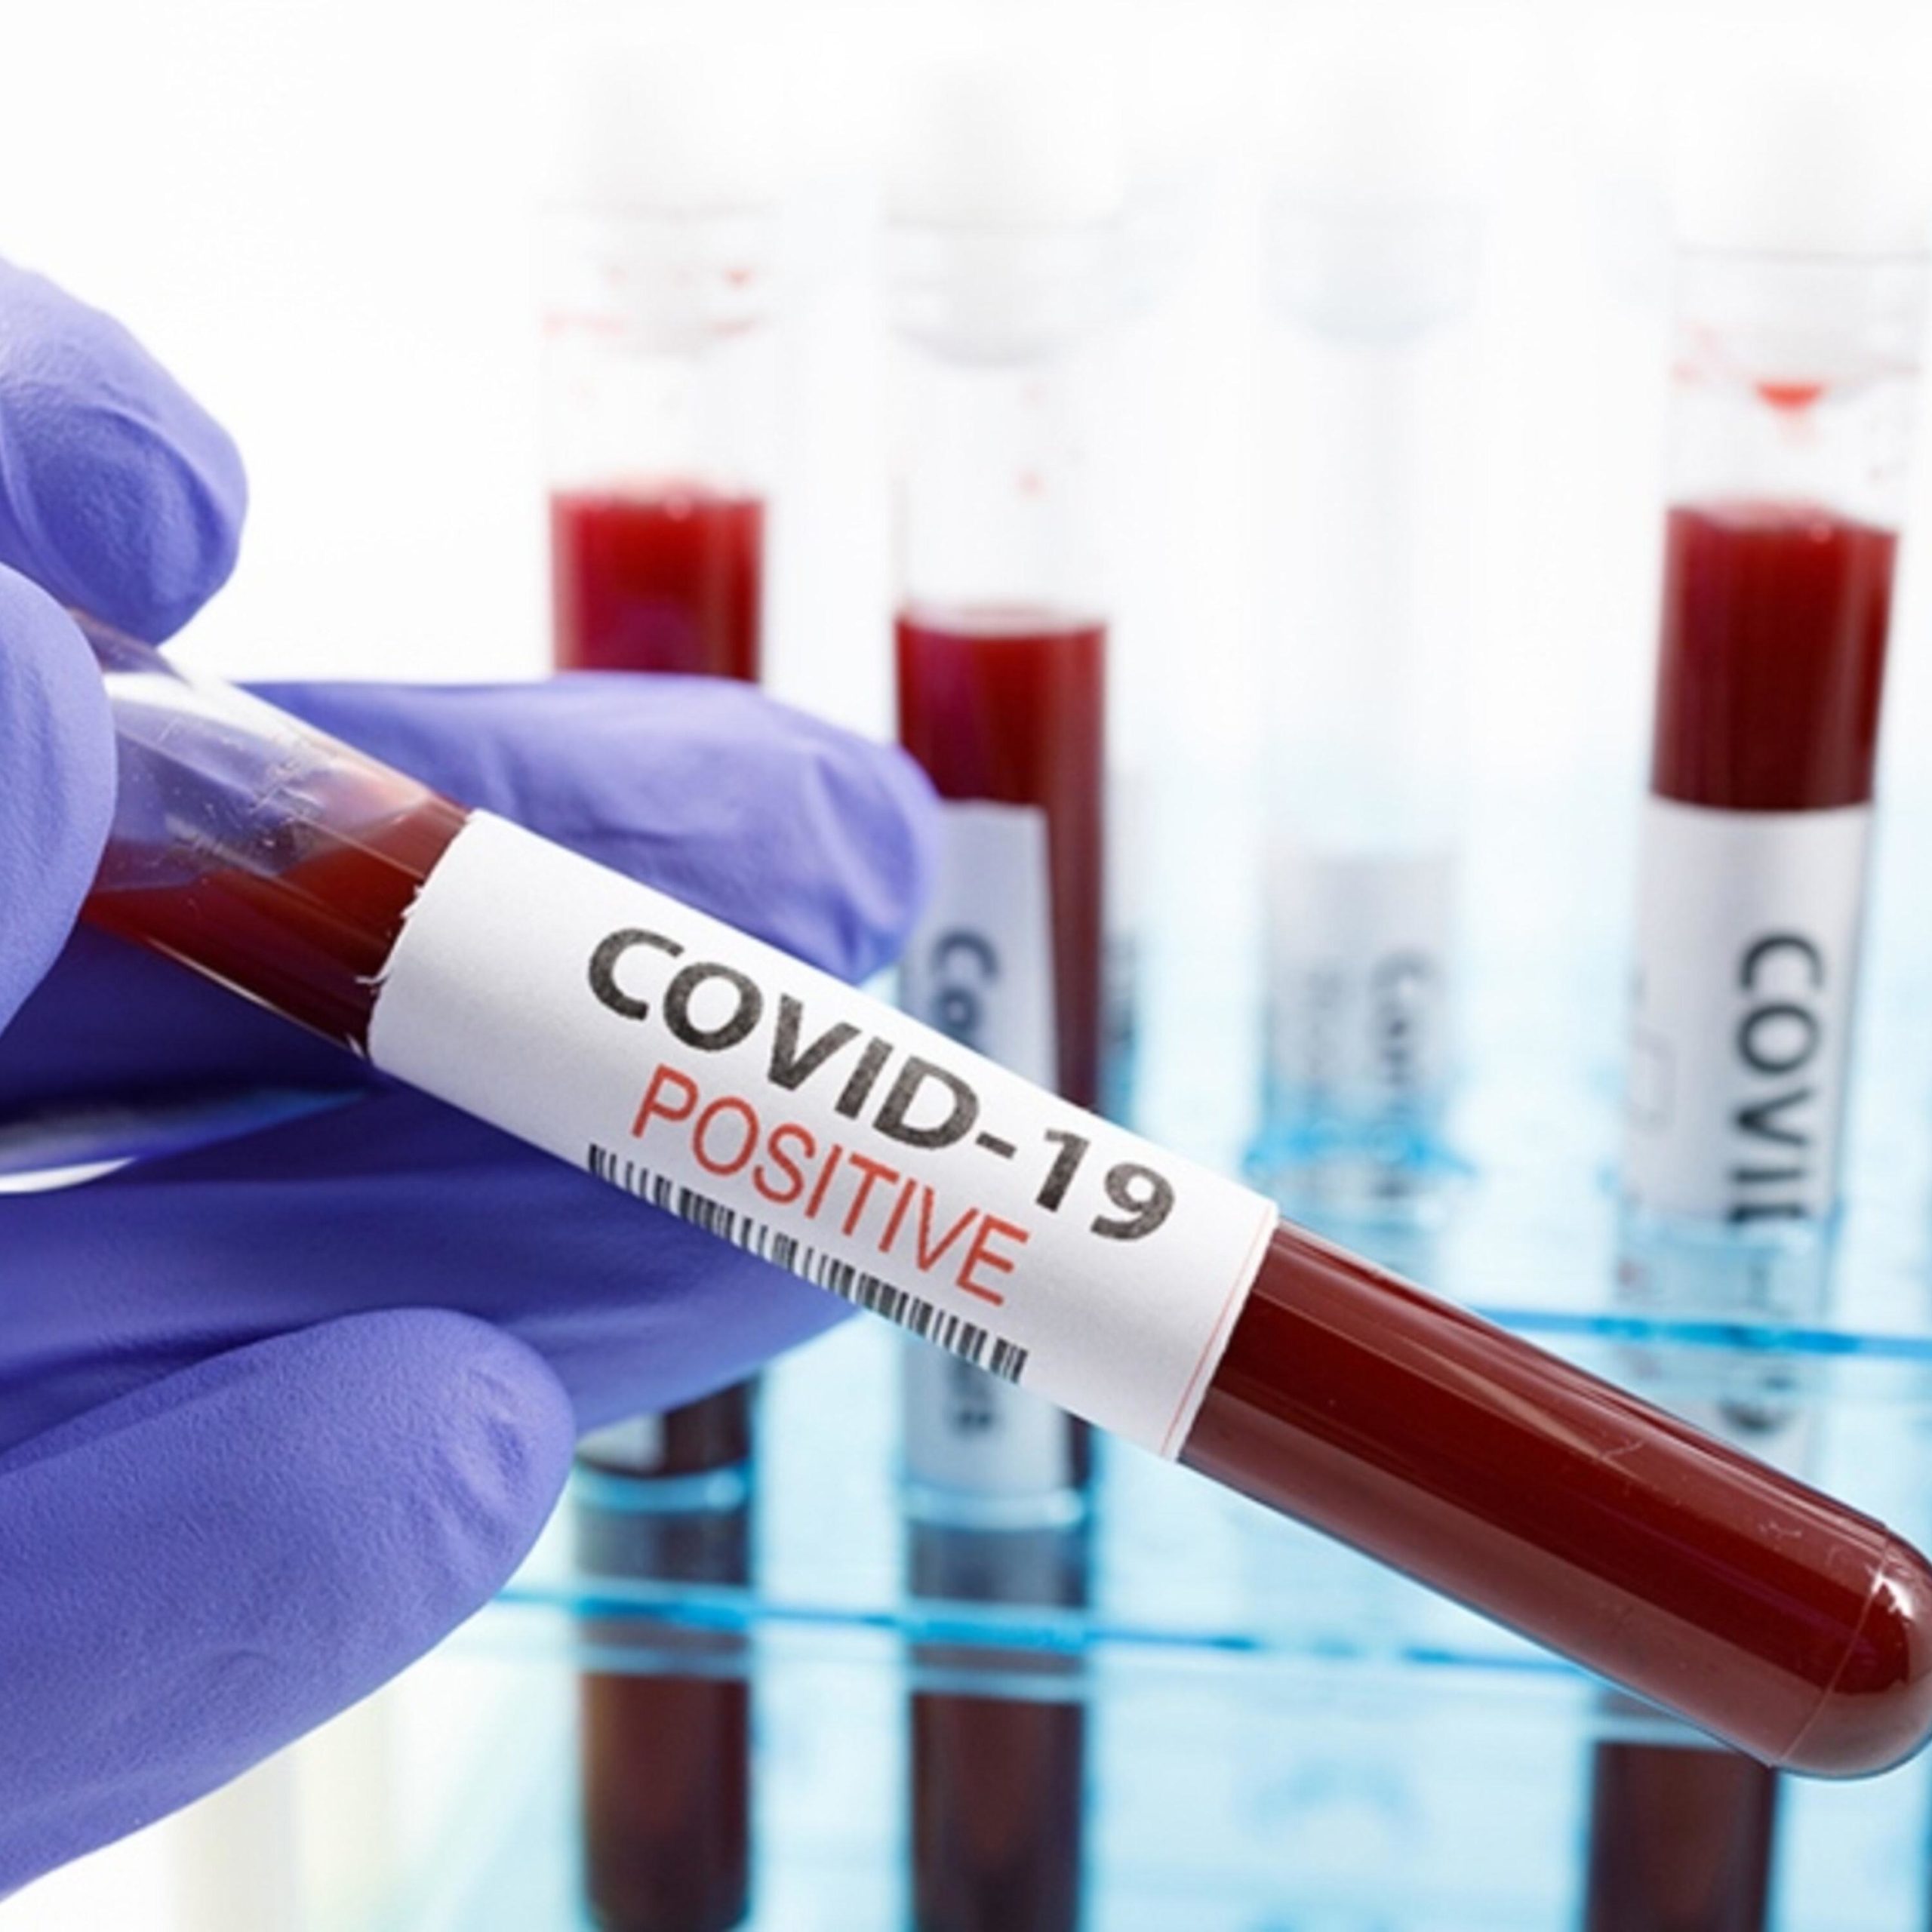 COVID-19 positive test tube